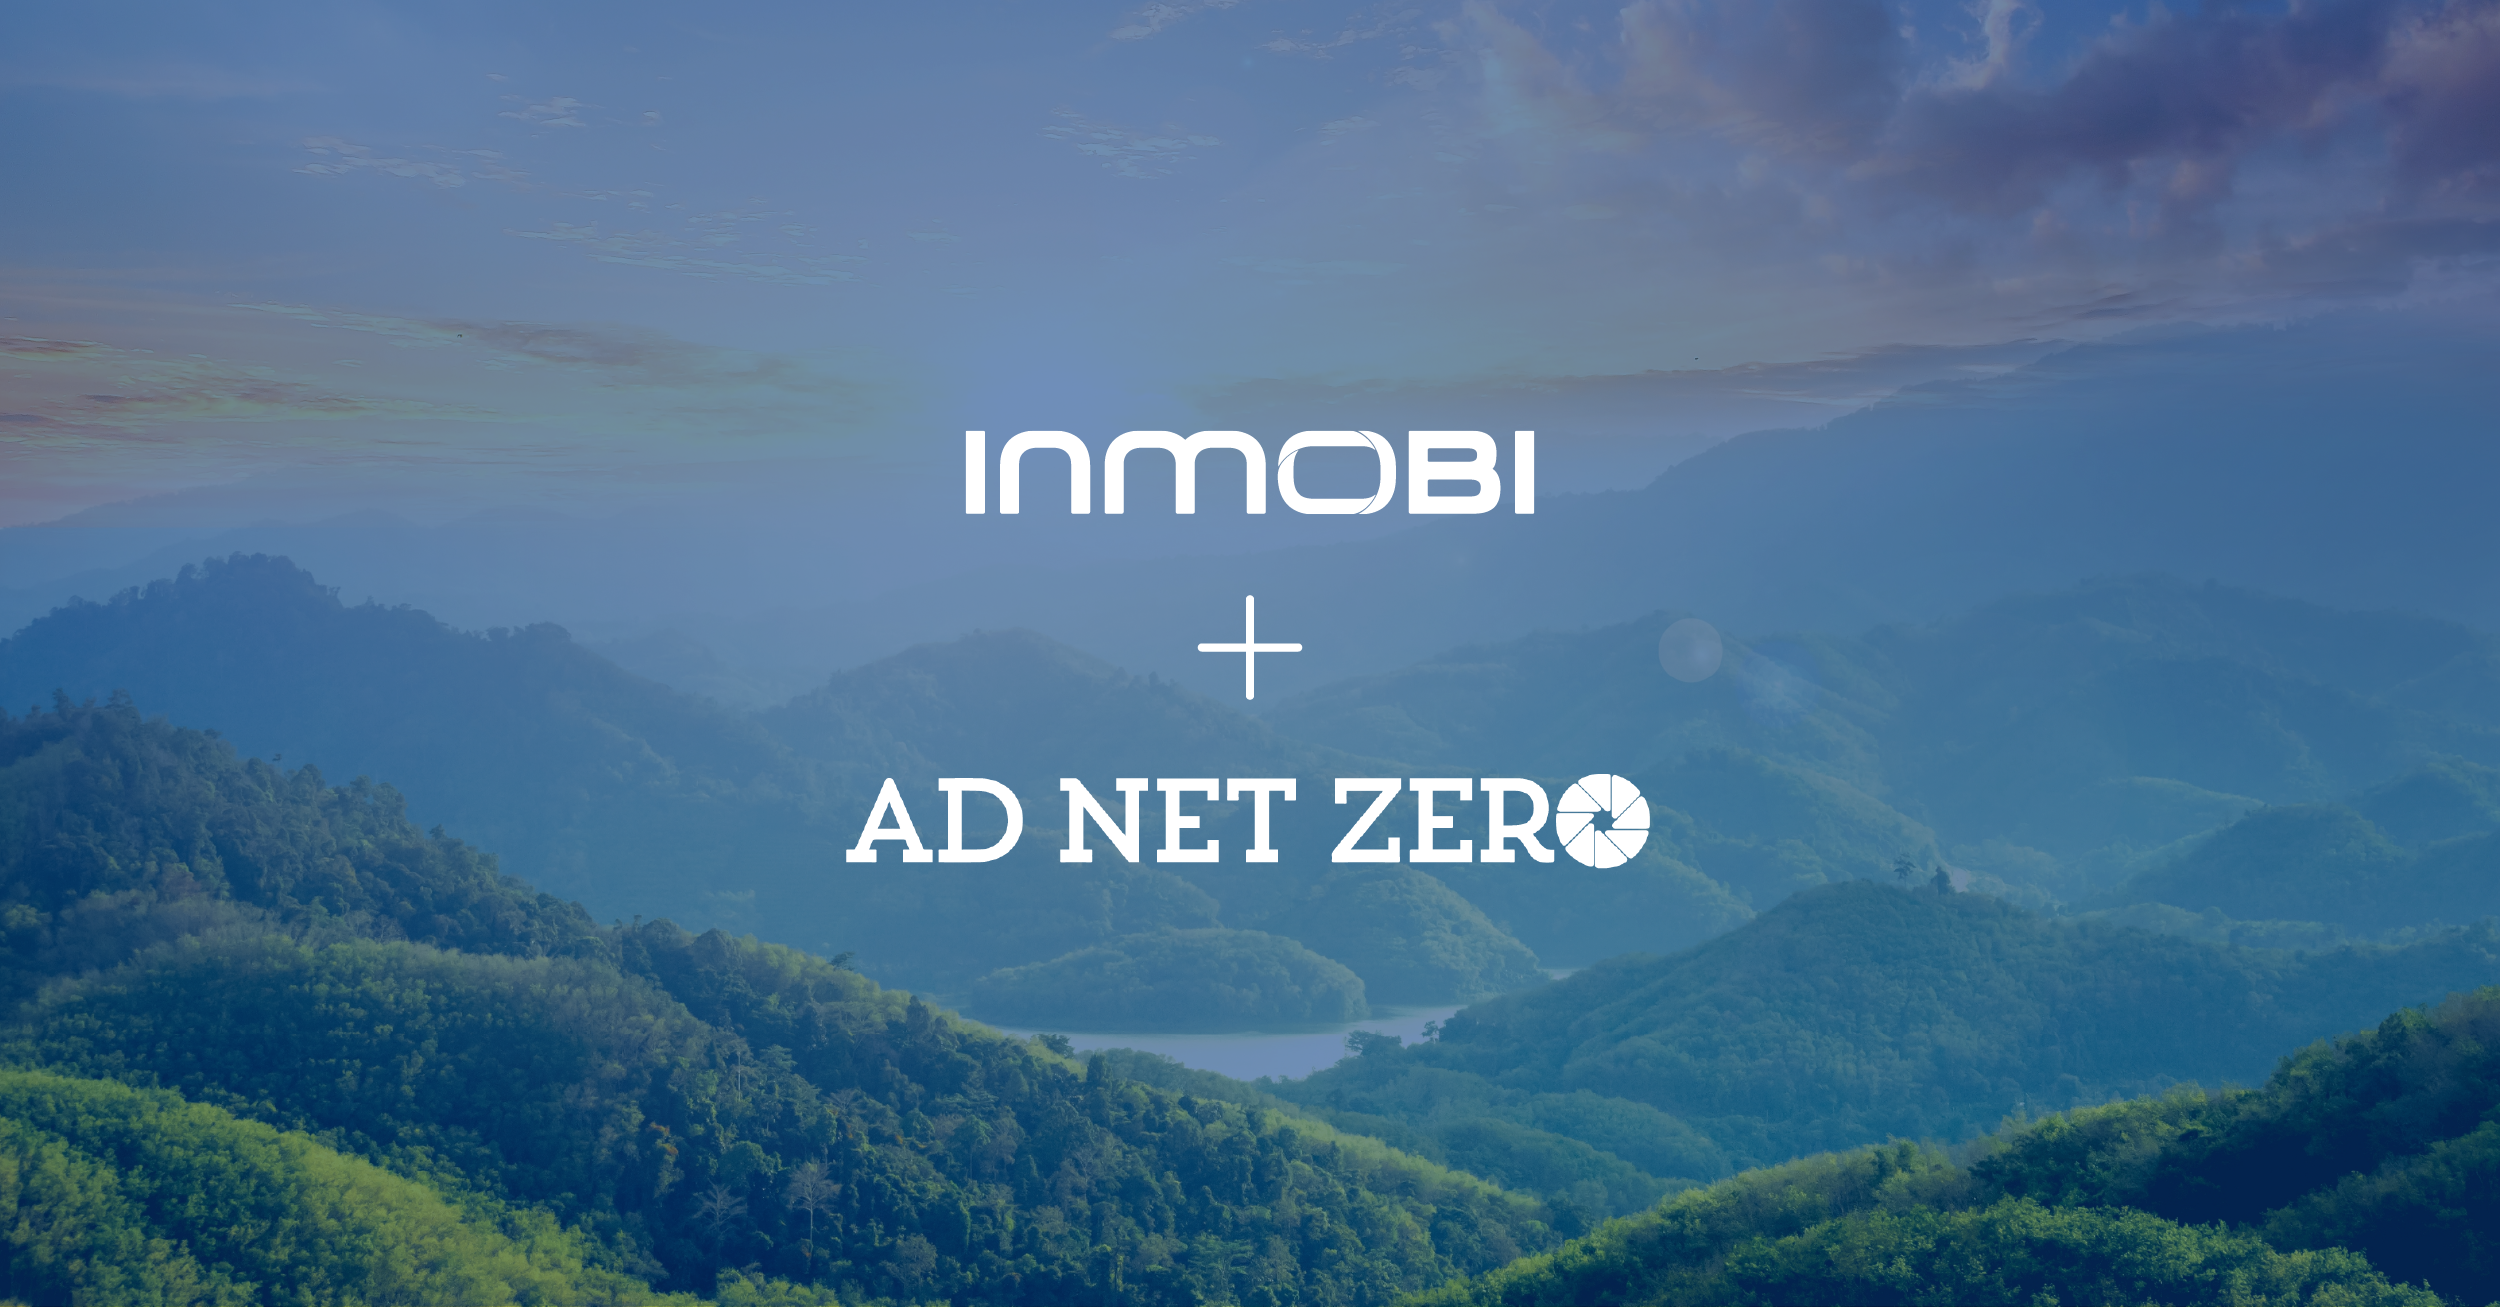   The Future is Looking Greener: InMobi Partners with Ad Net Zero  